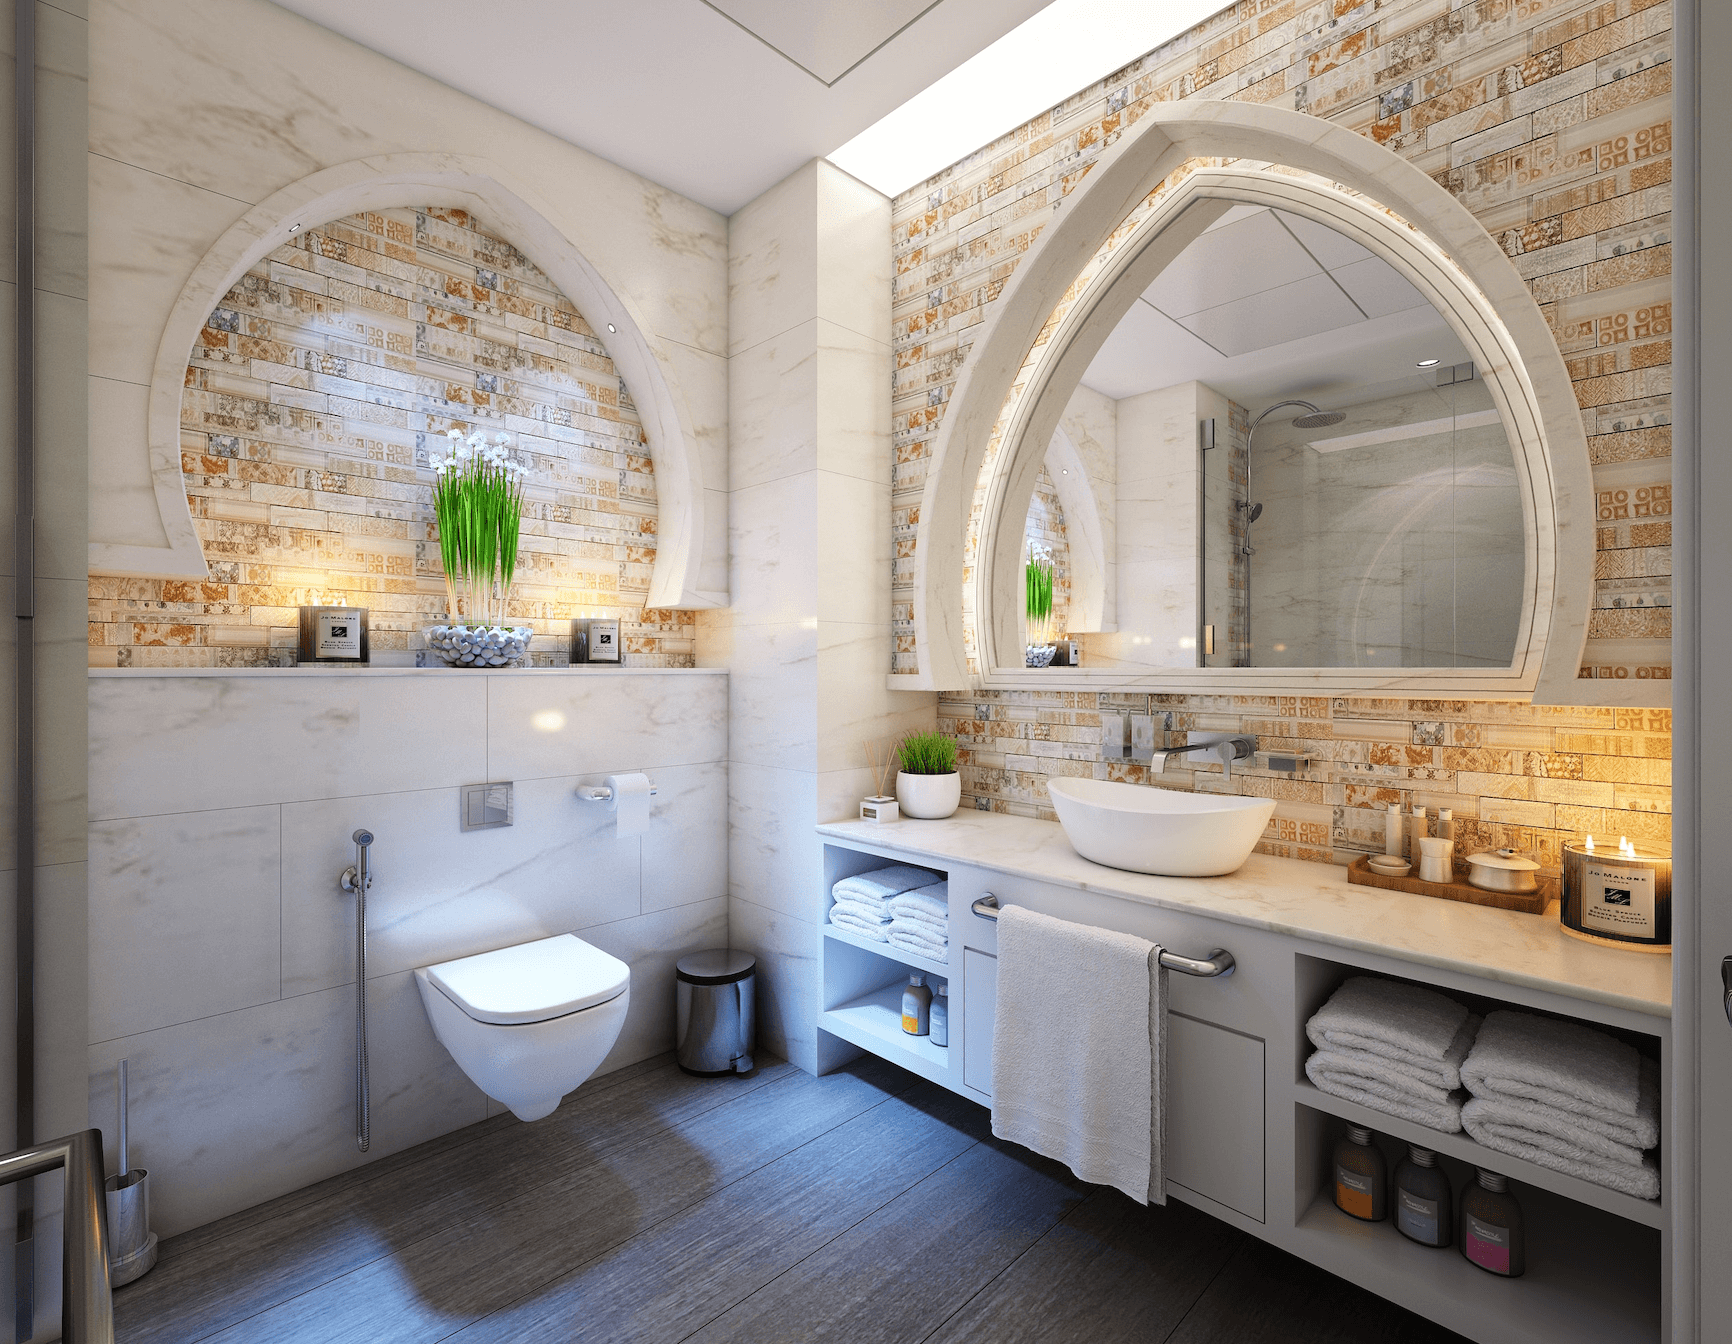 6 Steps To Designing A Luxury Bathroom - Bathroom Design Center